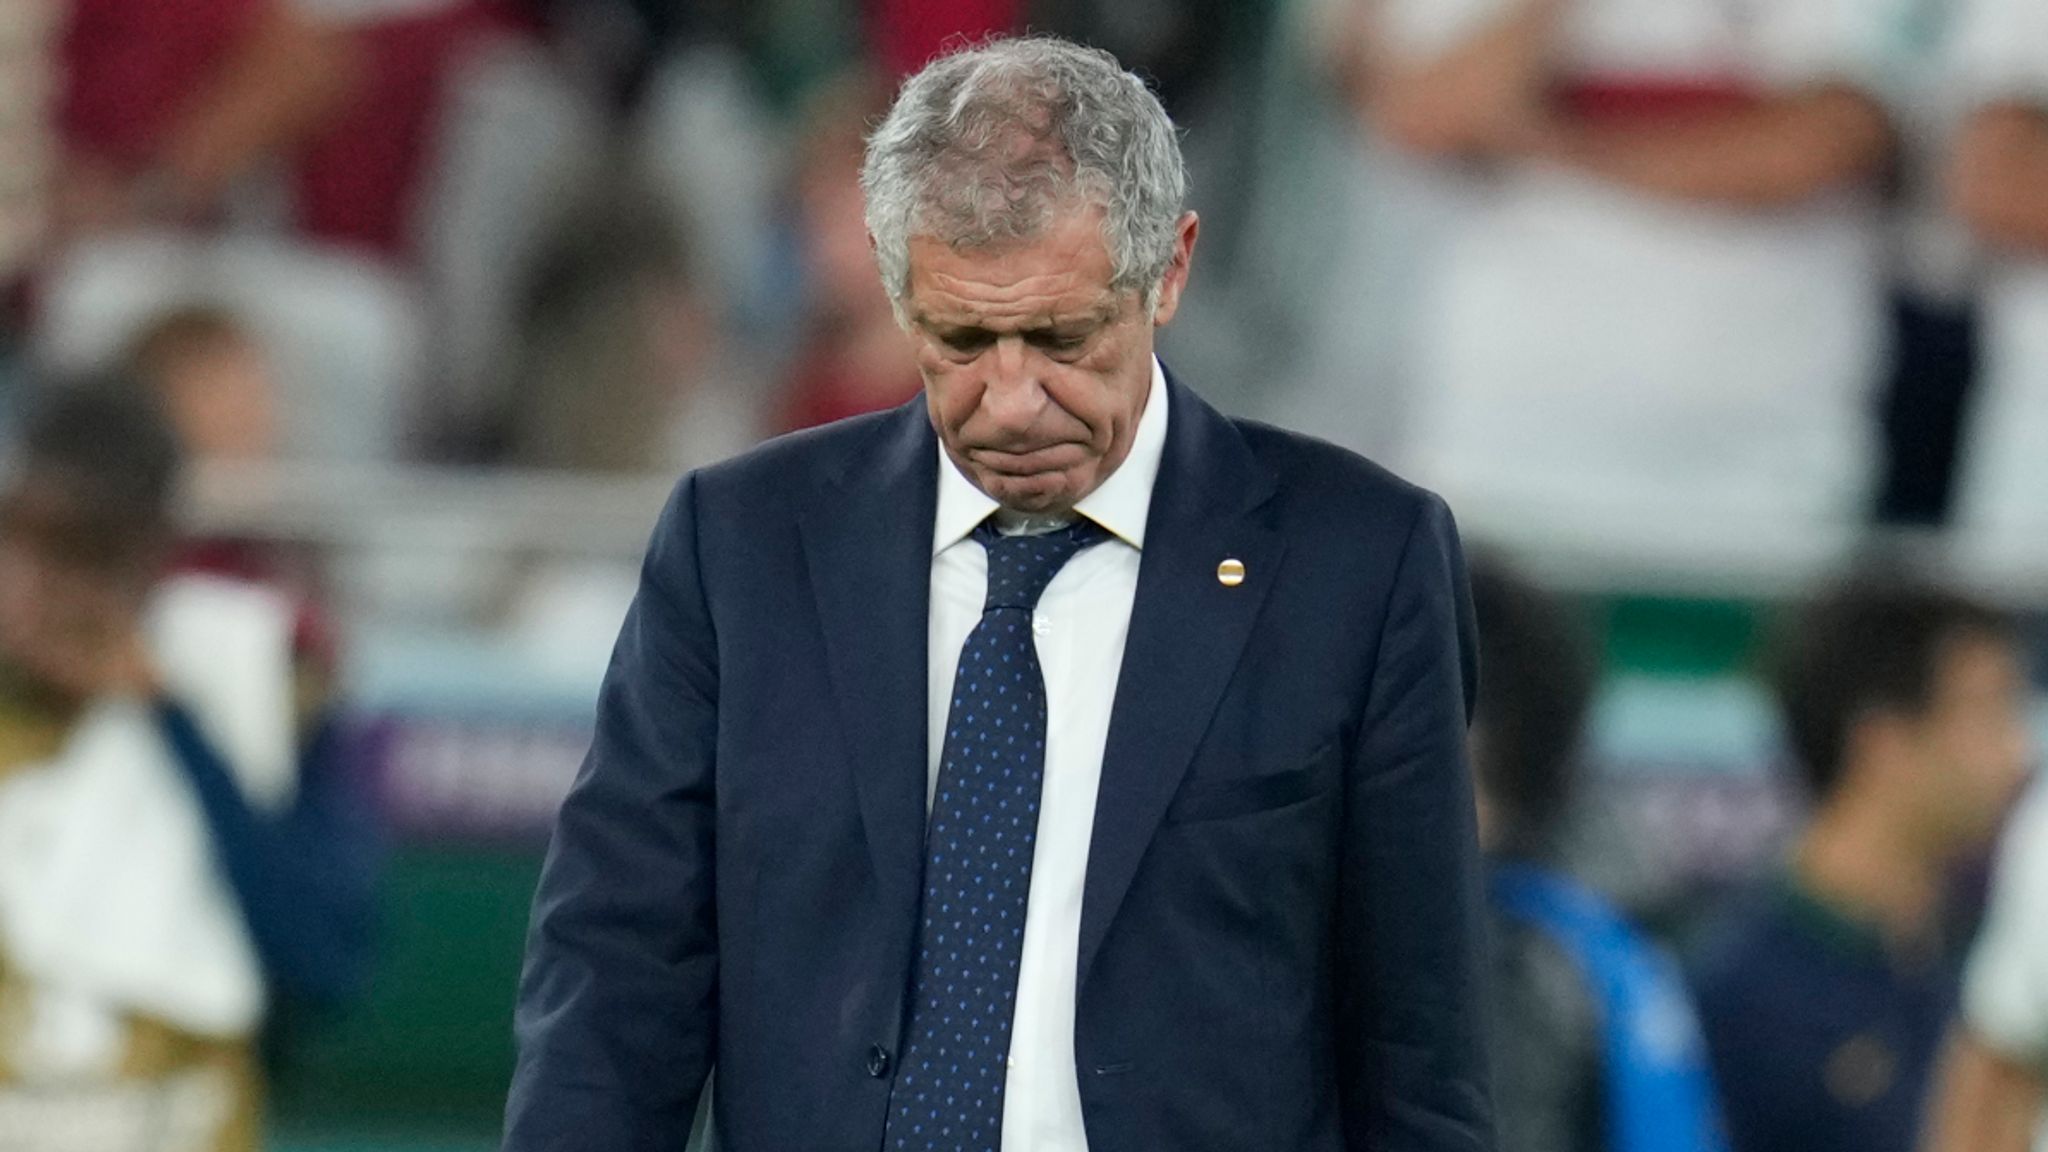 Fernando Santos steps down as Portugal head coach after World Cup exit, Football News